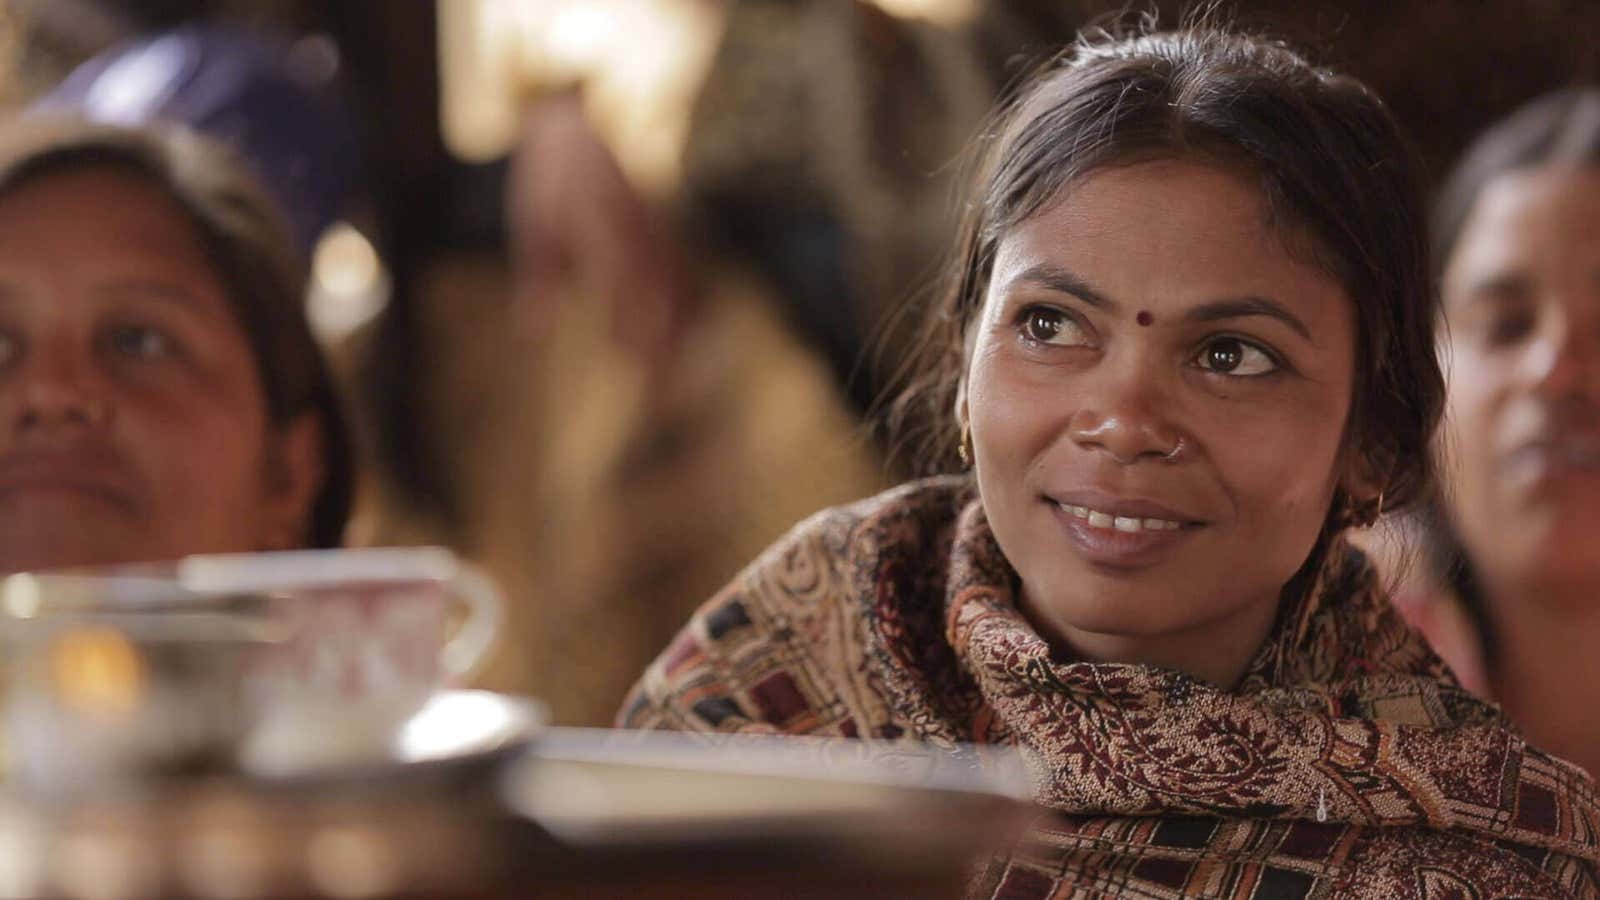 All-woman Indian media platform says Oscar-nominated documentary misrepresents its work